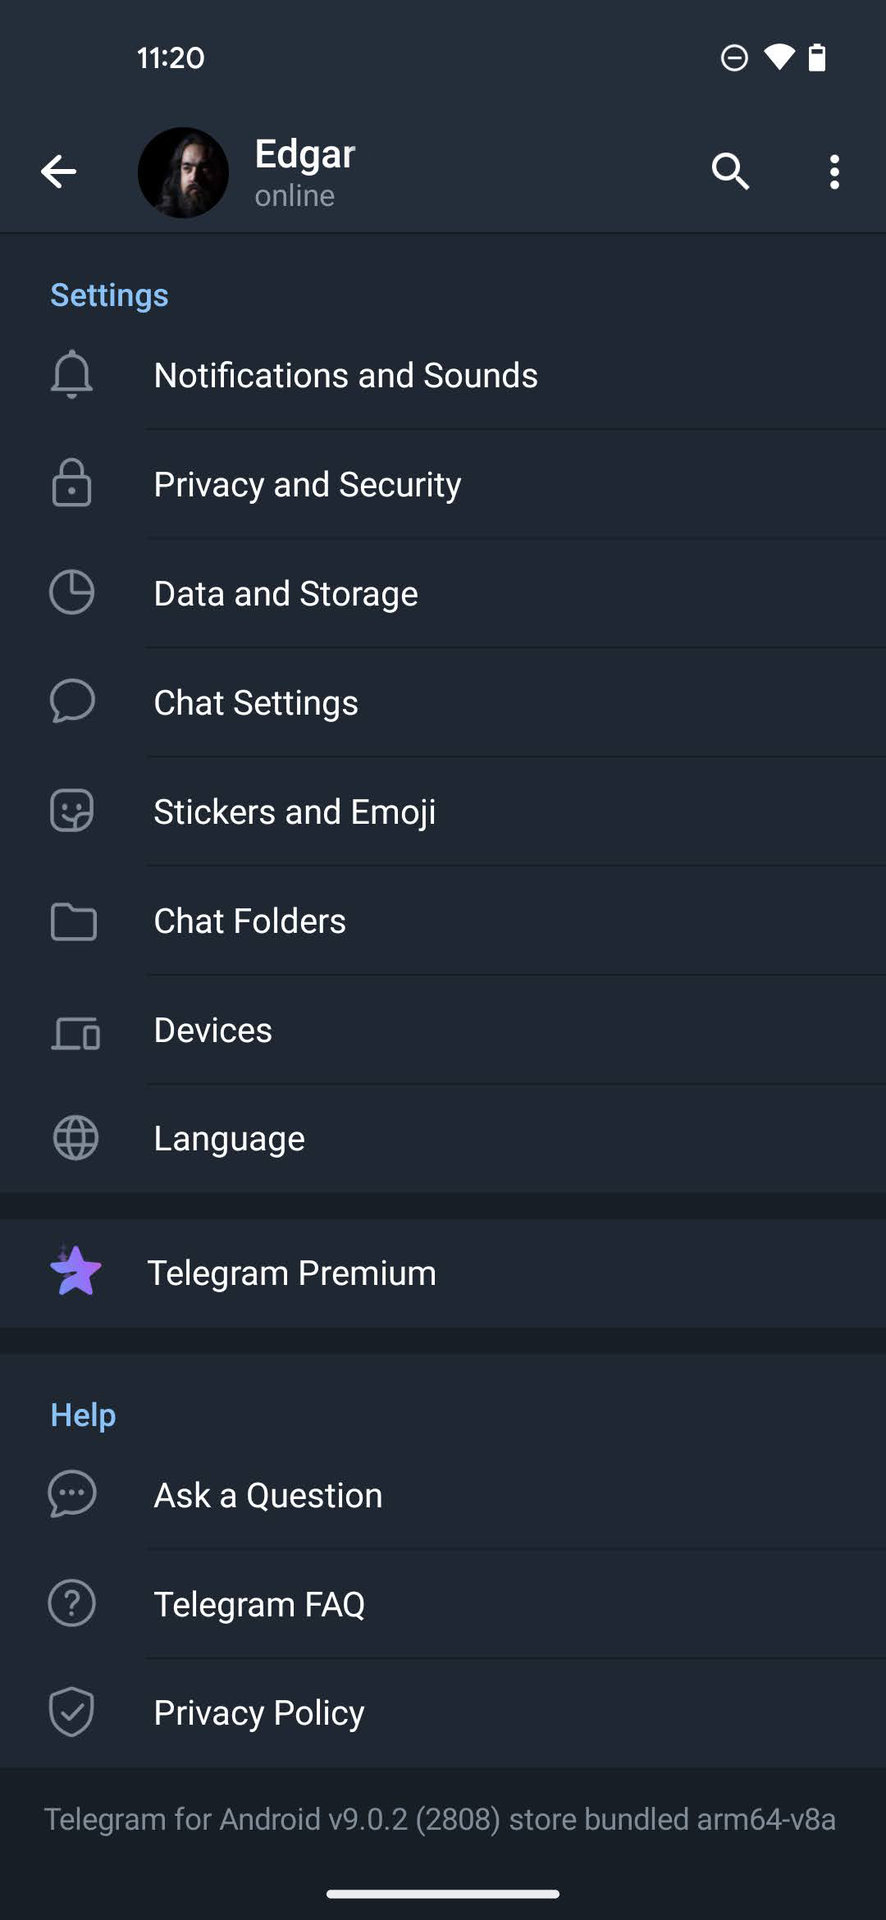 How to buy Telegram Premium on Android 2